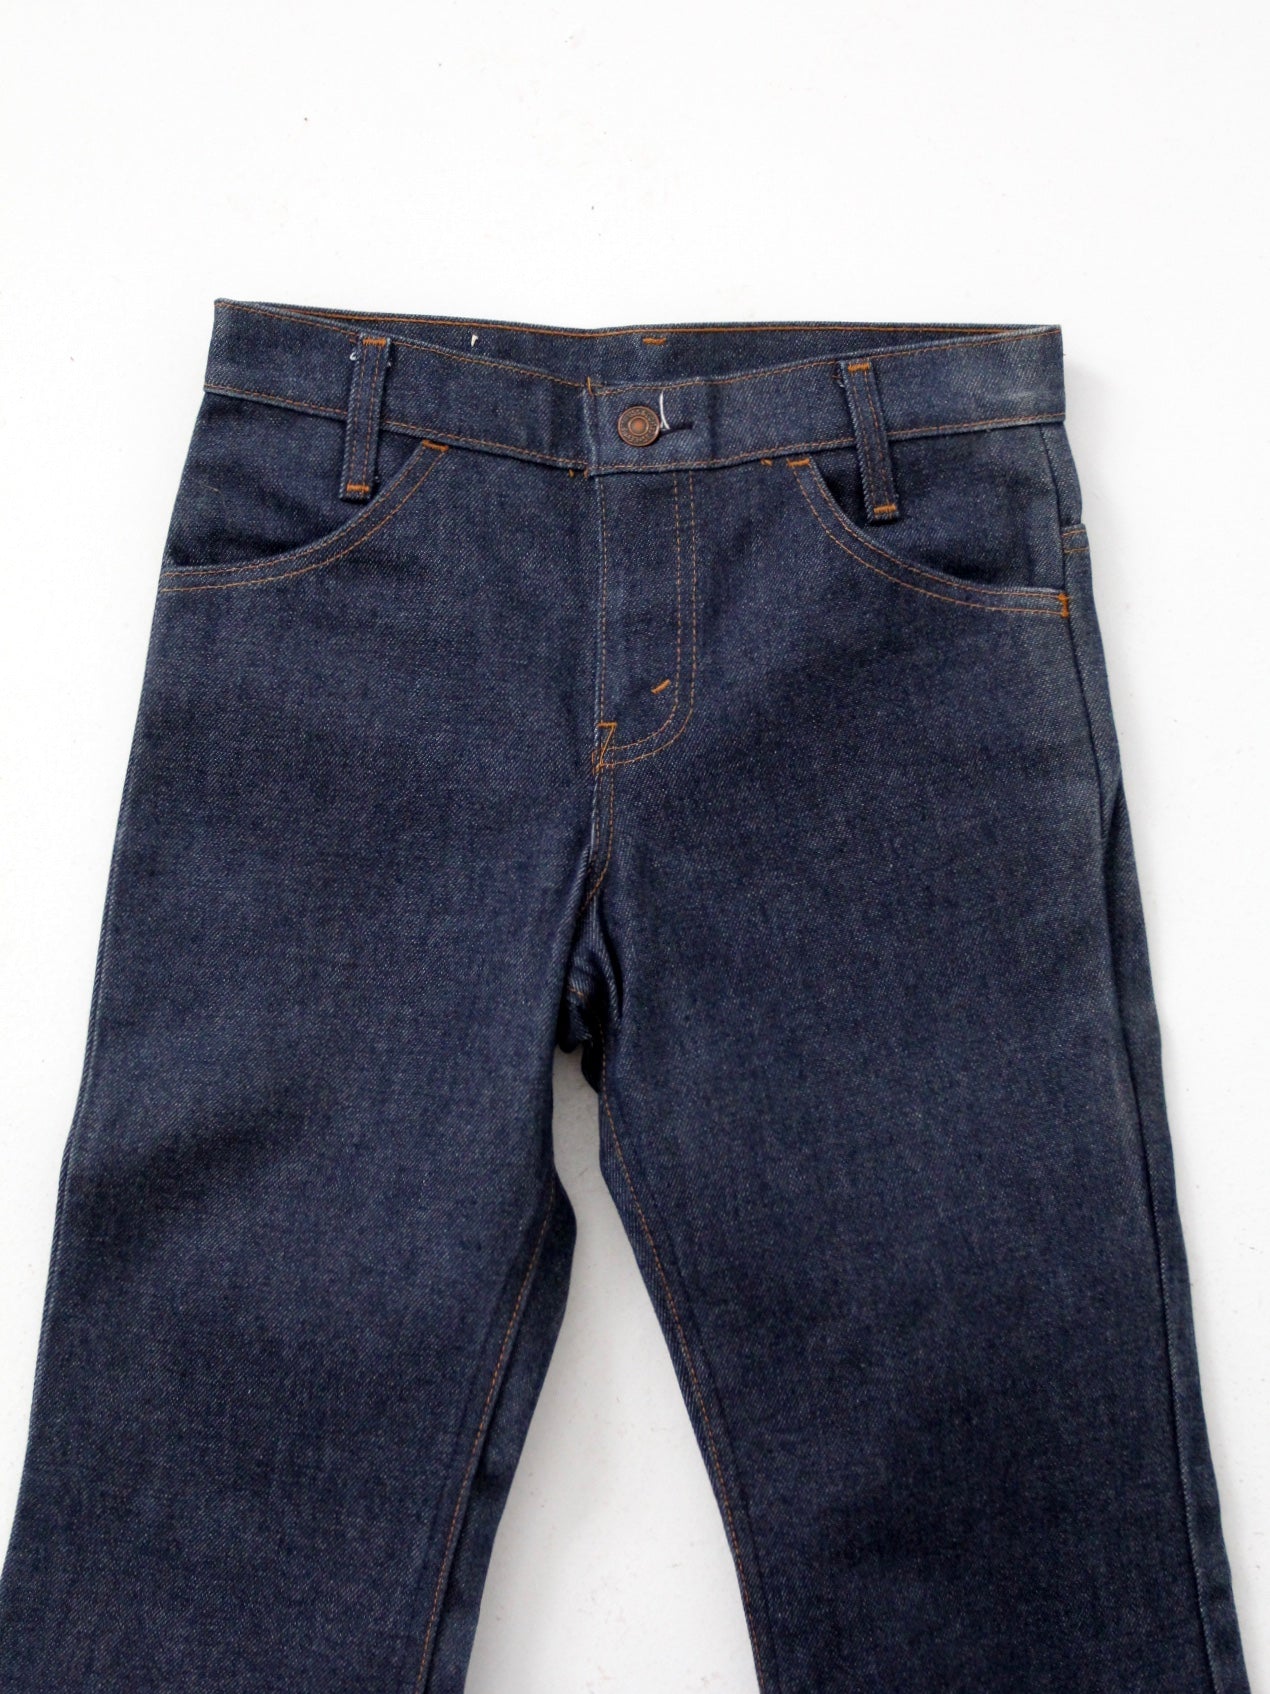 vintage Levis 684 bell bottom jeans, 28 x 28